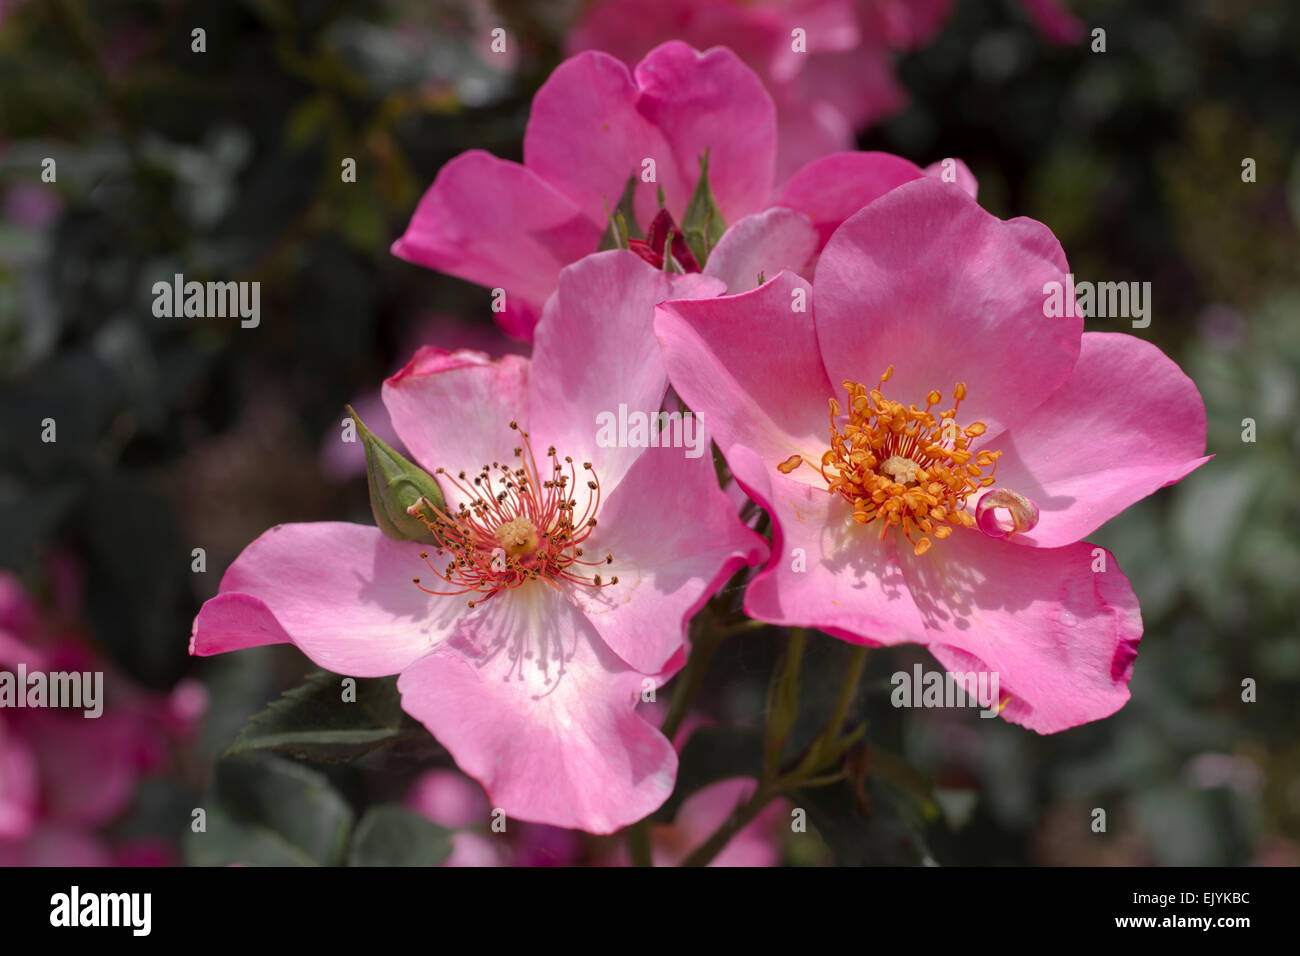 Rosa Dainty Tenderness, shrub rose Stock Photo